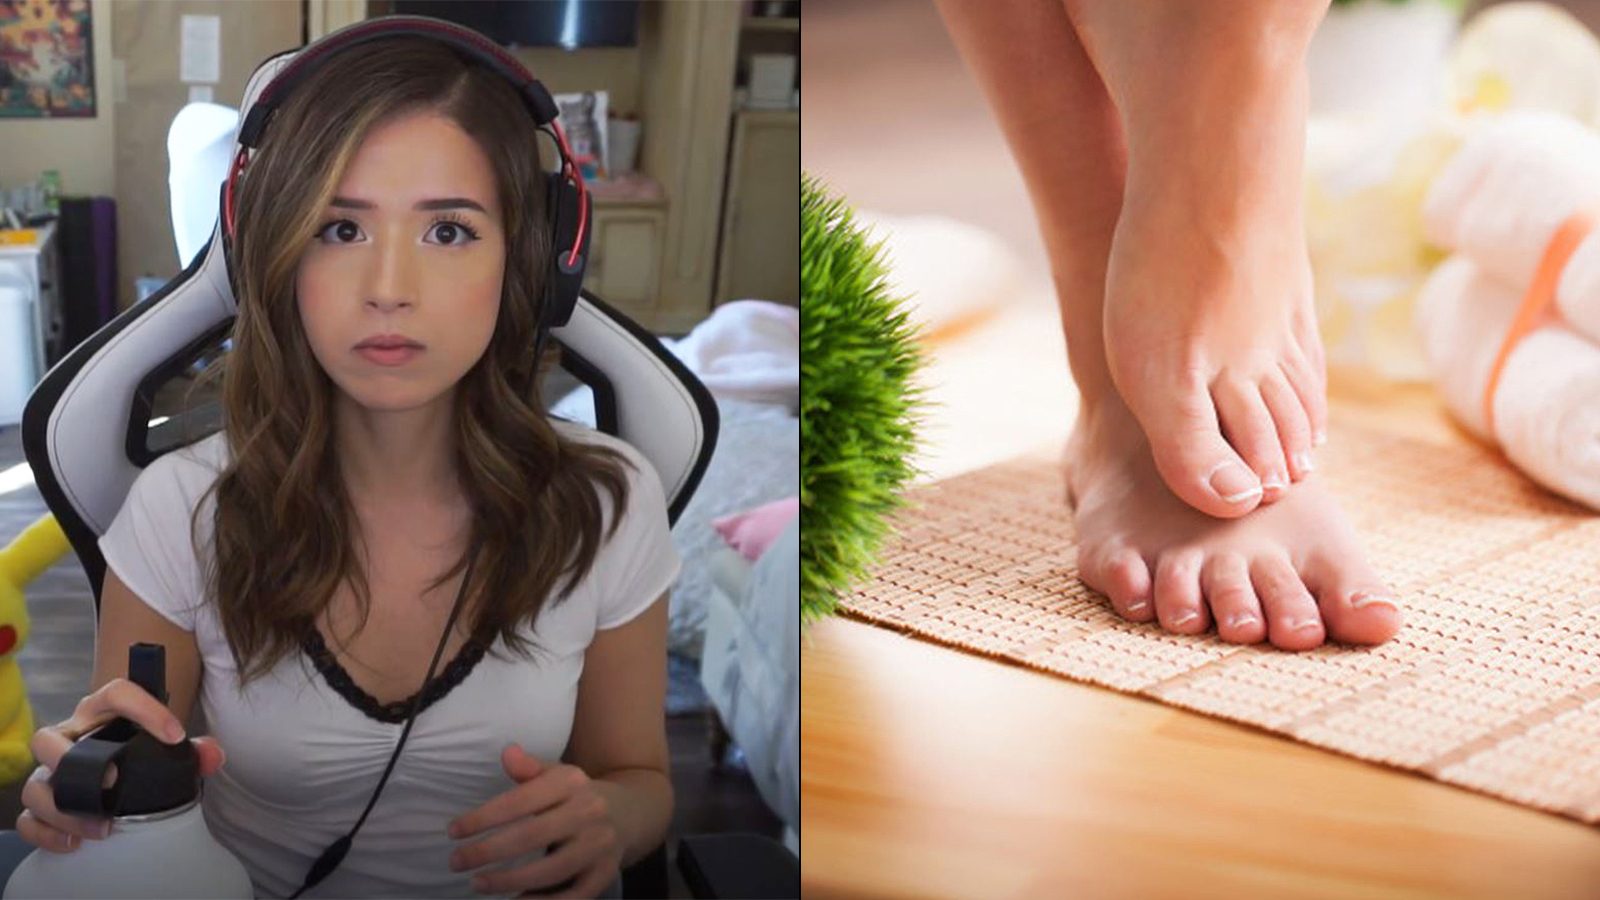 Pokimane donator “exposes” Minecraft streamer for browsing her foot  subreddit - Dexerto